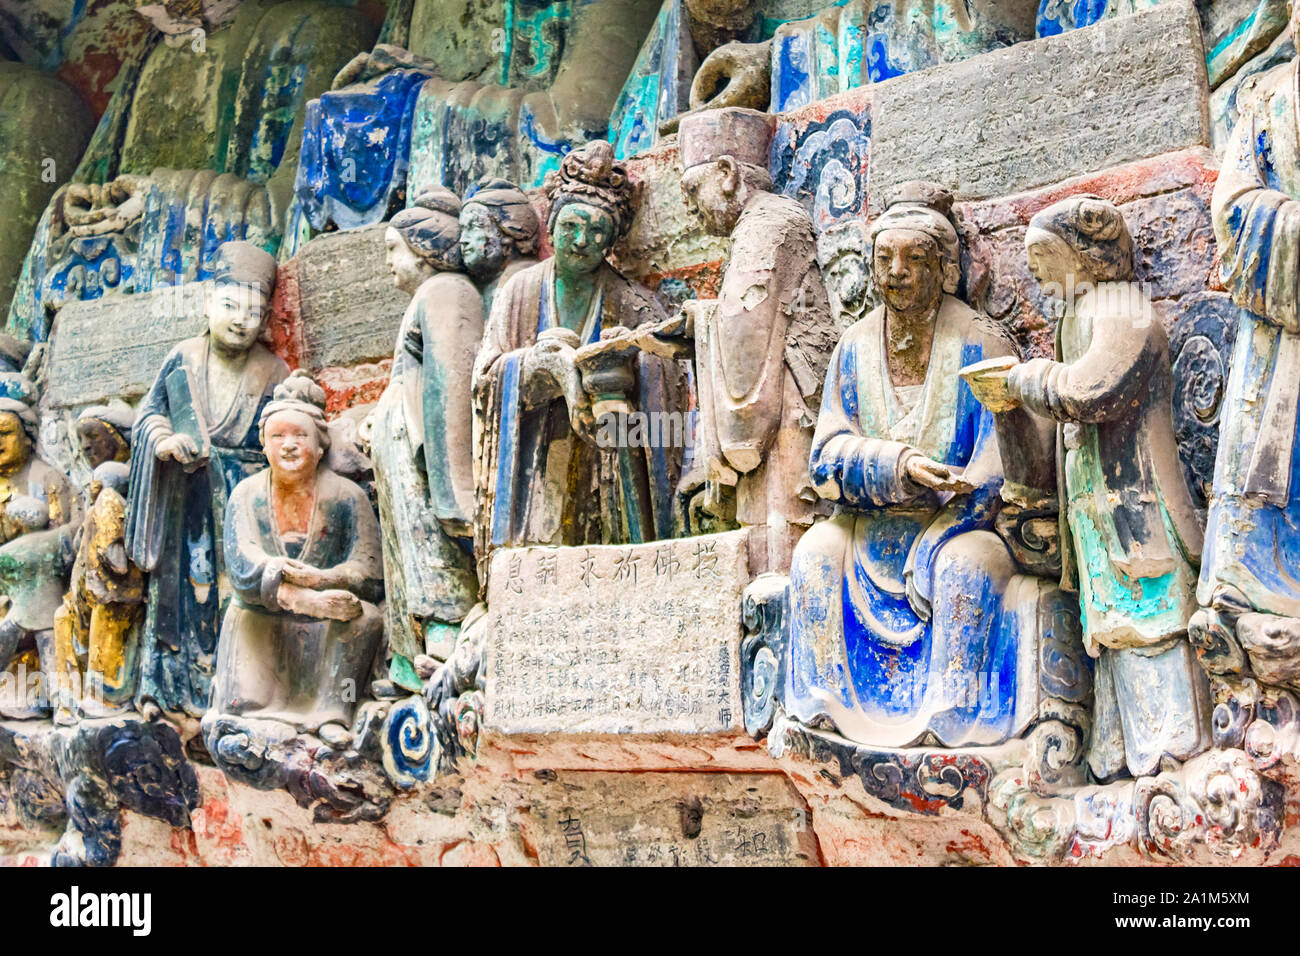 Sculptures rupestres de Dazu Dazu en District, Chongqing, Chine. Banque D'Images